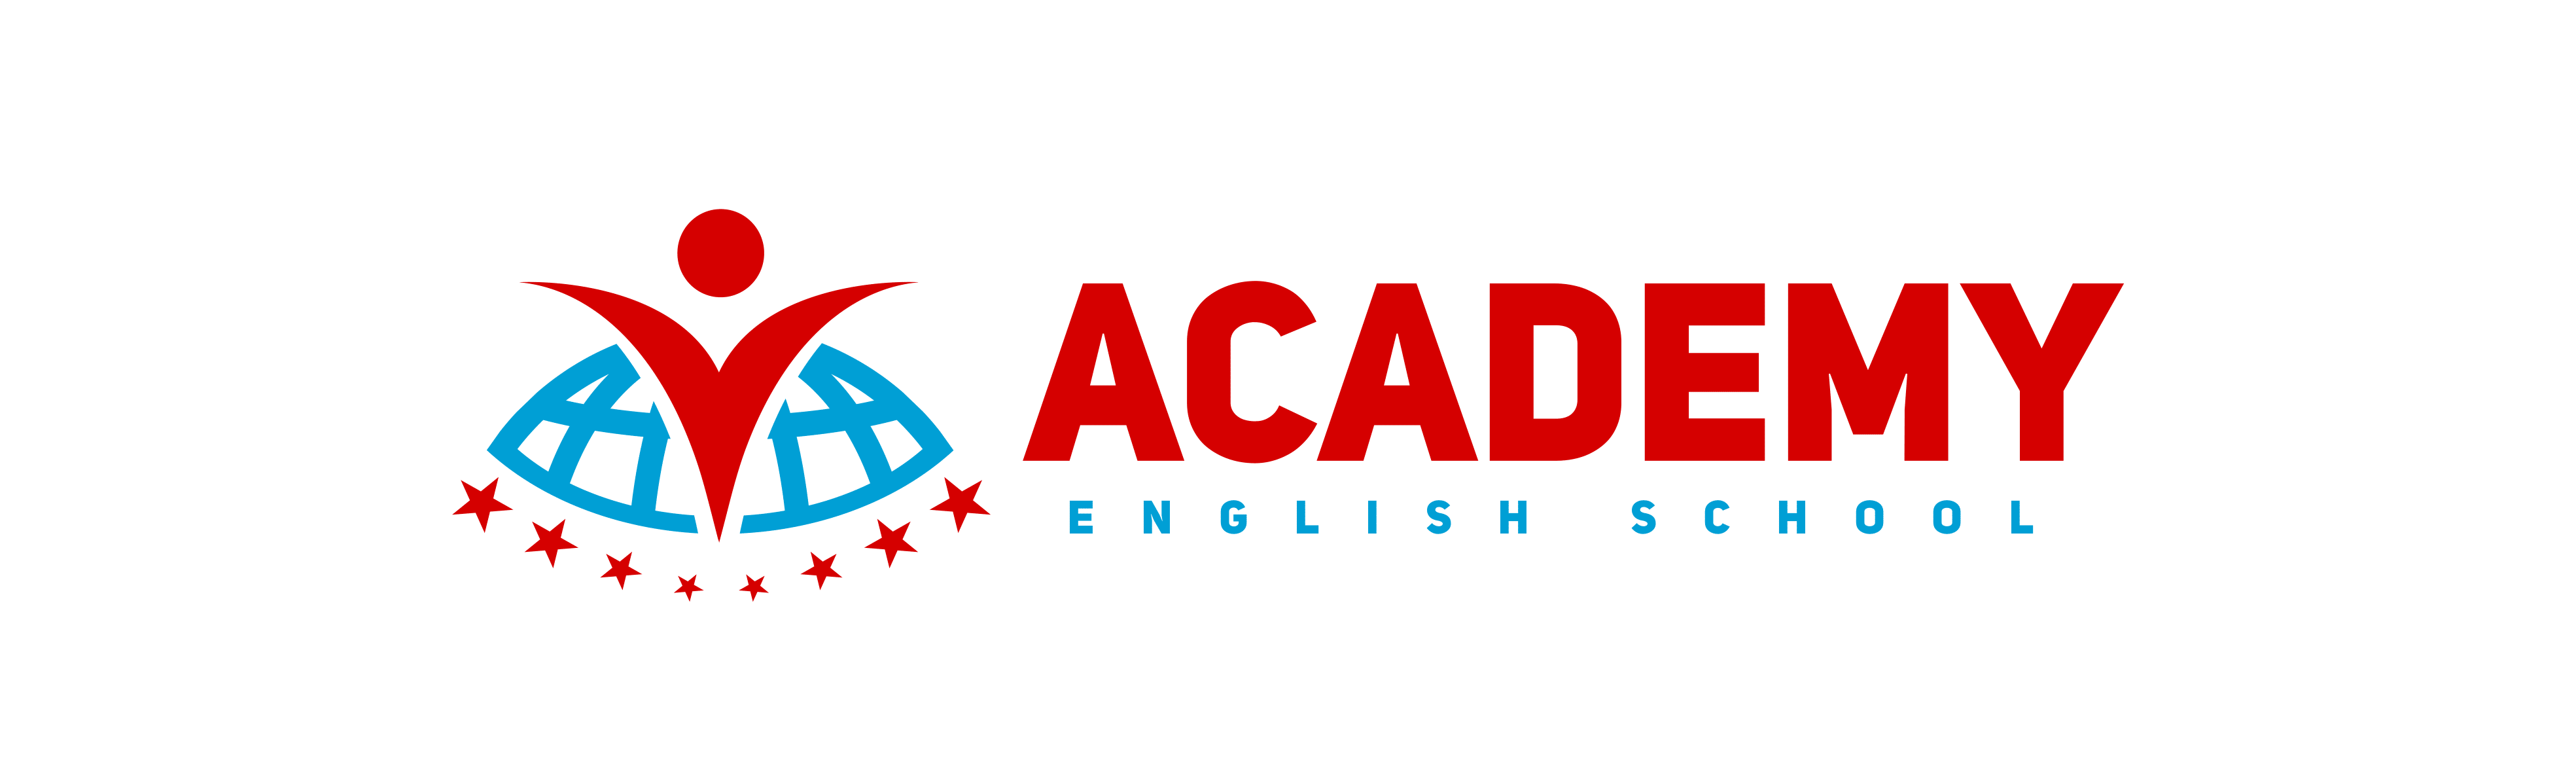 Academy English School